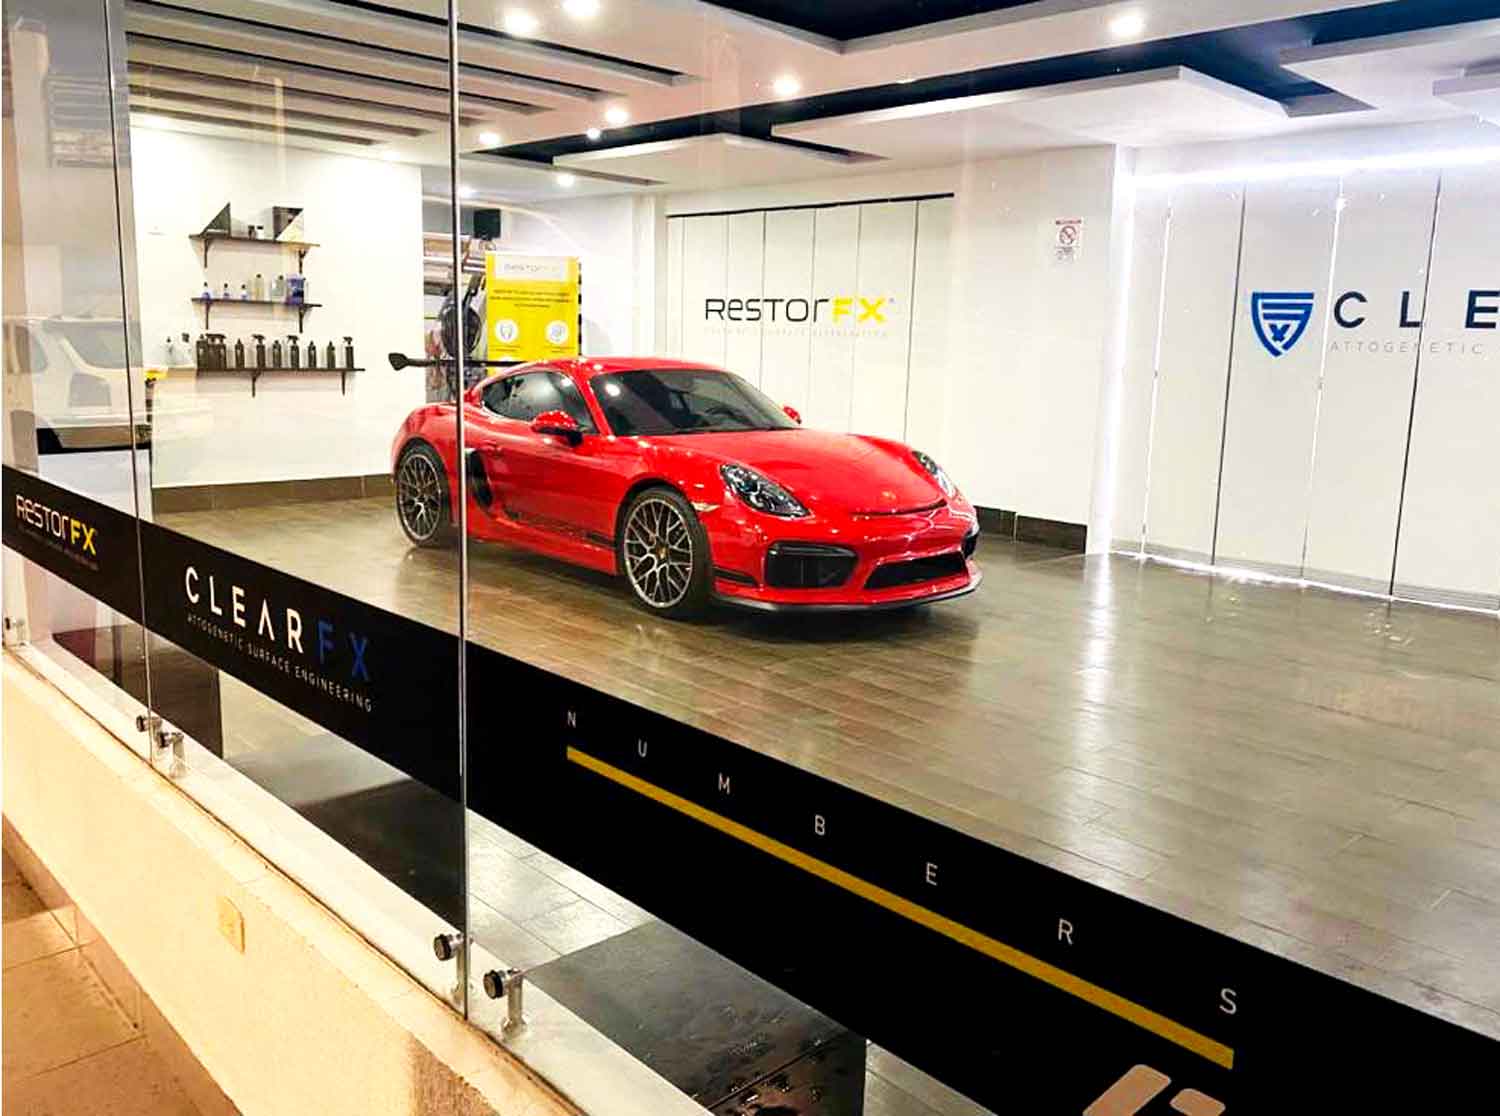 Red Porsche parked inside a well lit RestorFX Ambit center with branded walls